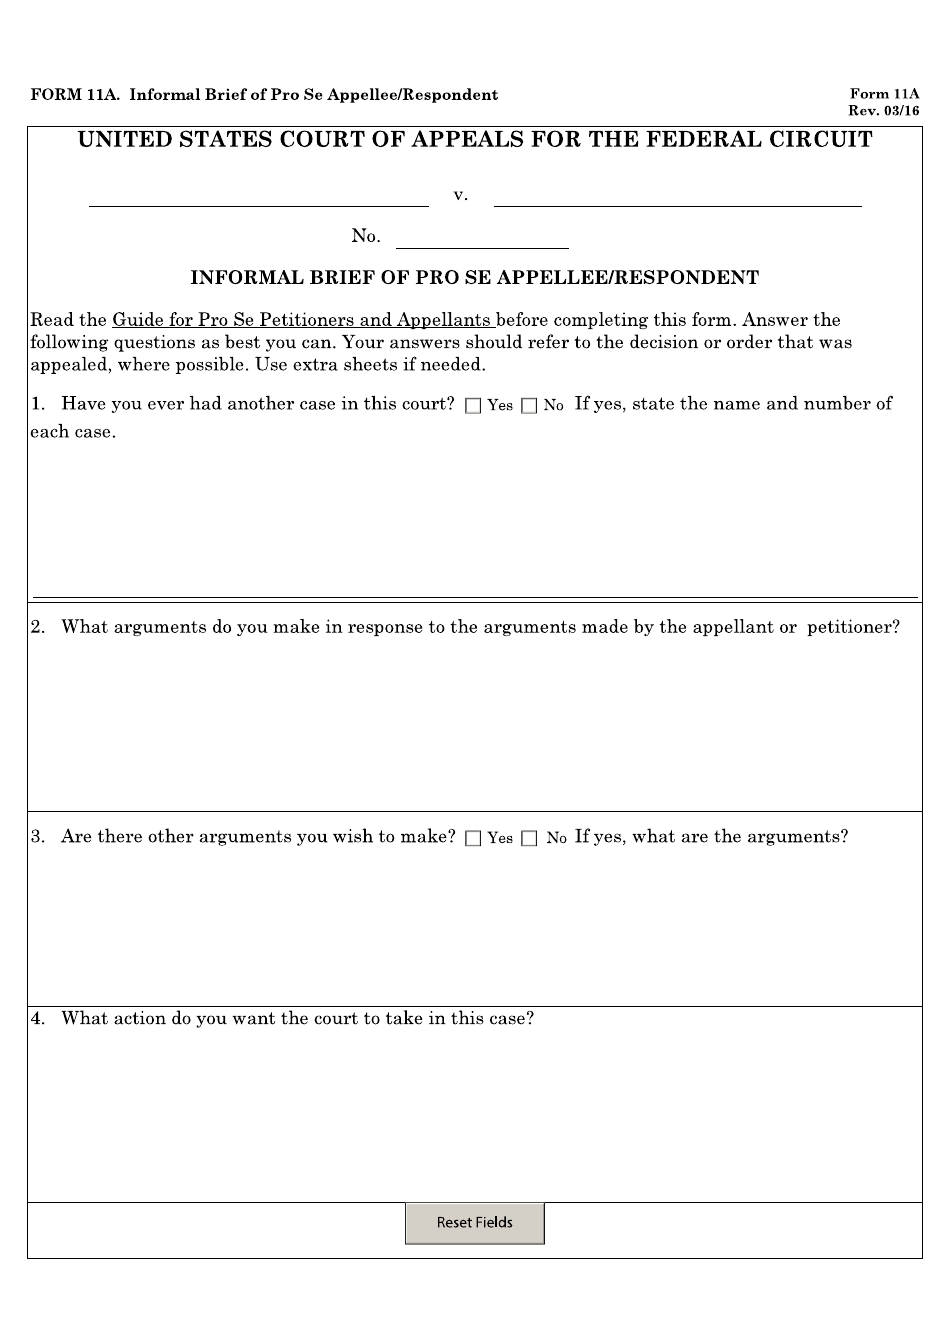 Form 11A Informal Brief of Prose Appellee / Respondent, Page 1